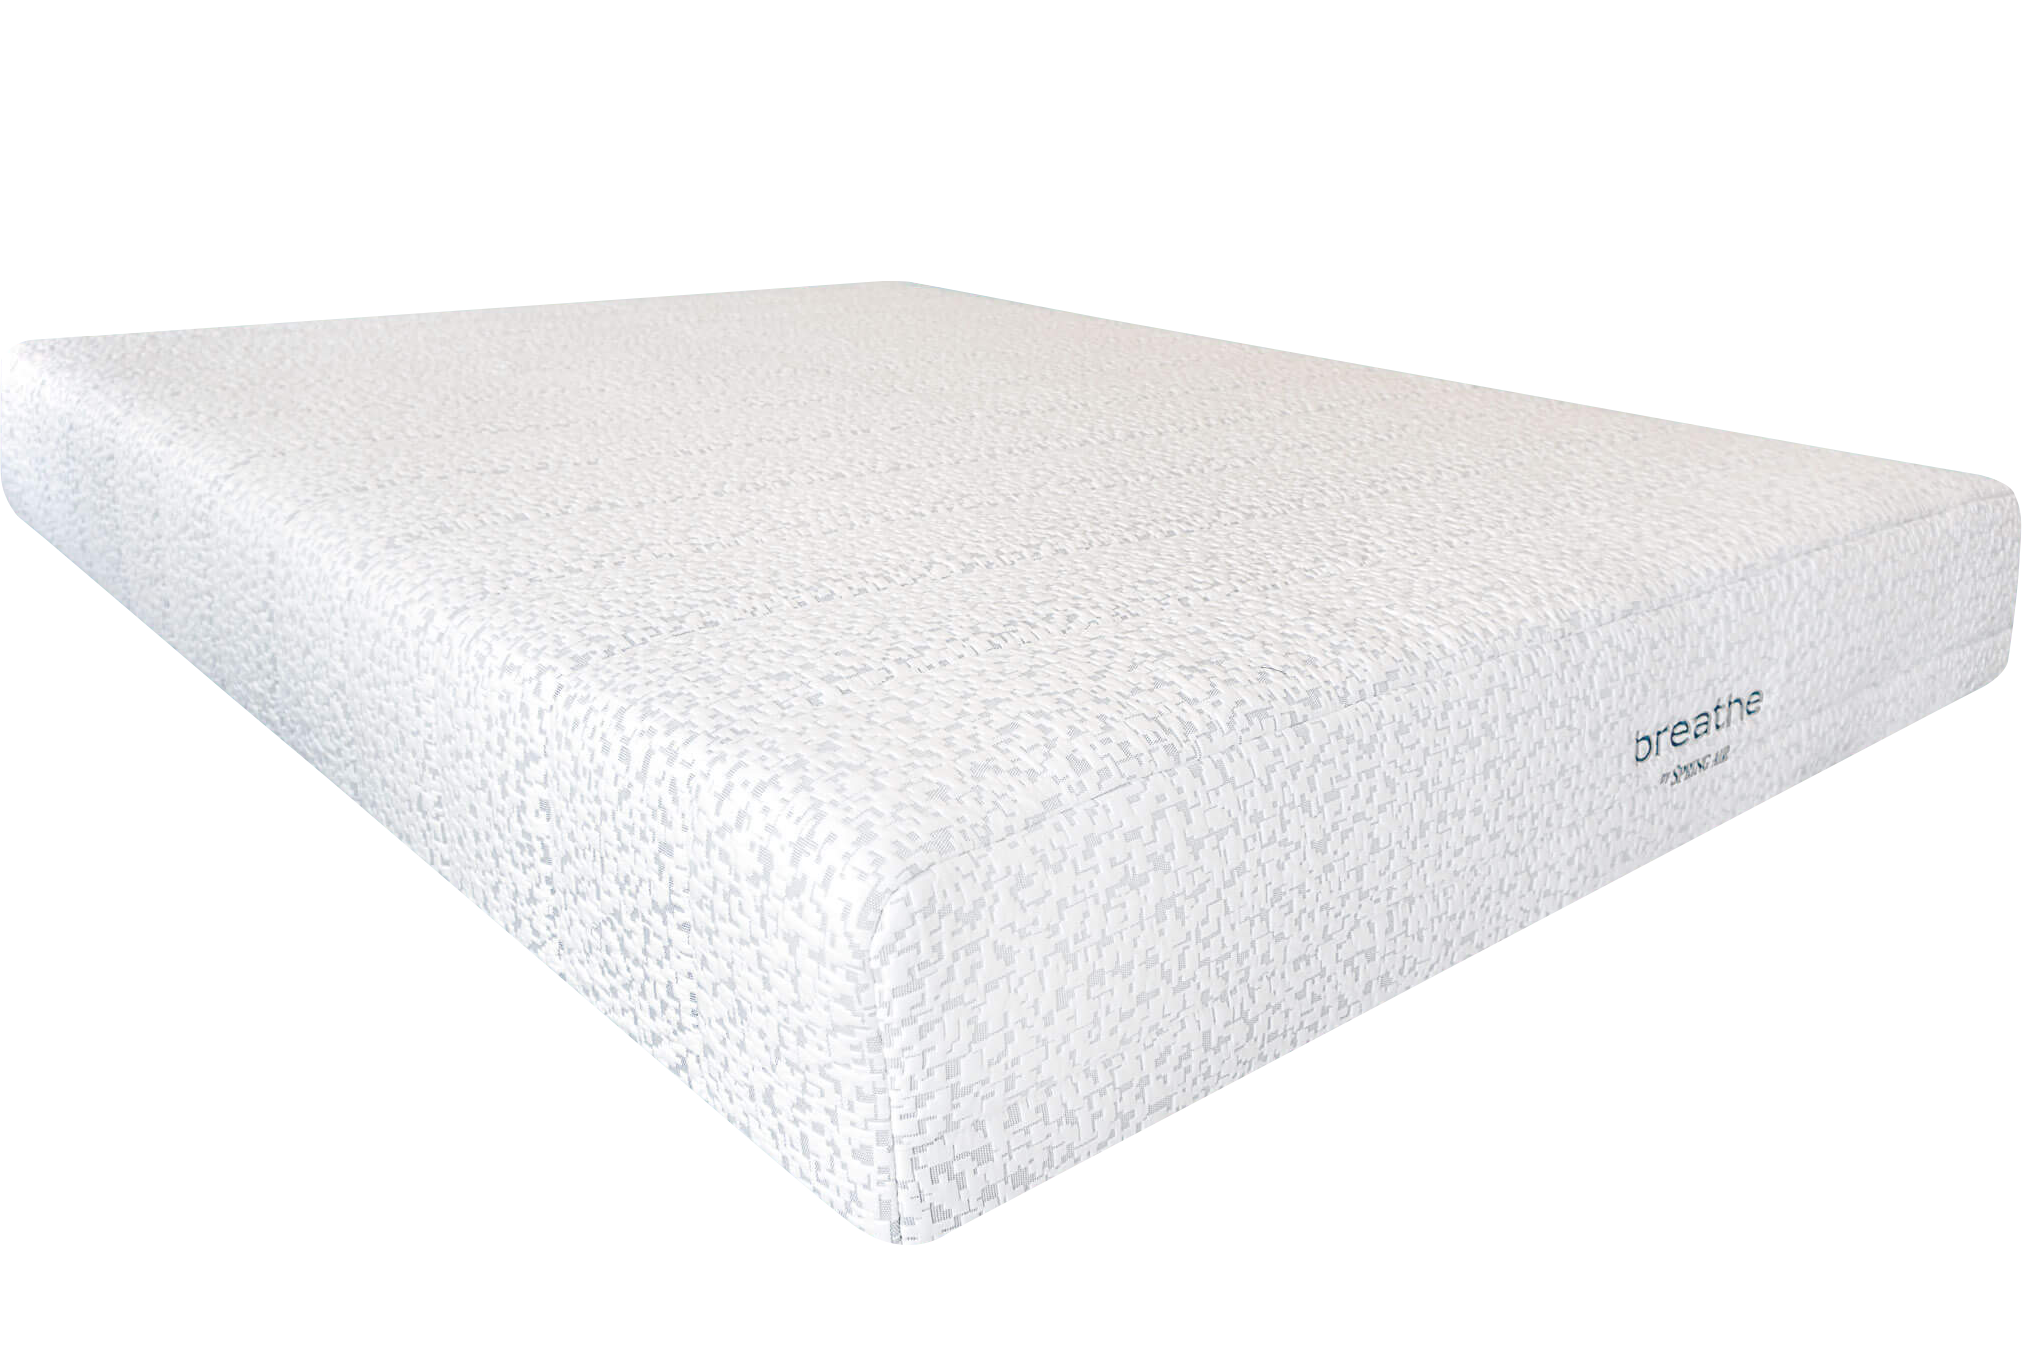 reviews of denise austin 10 memory foam mattress